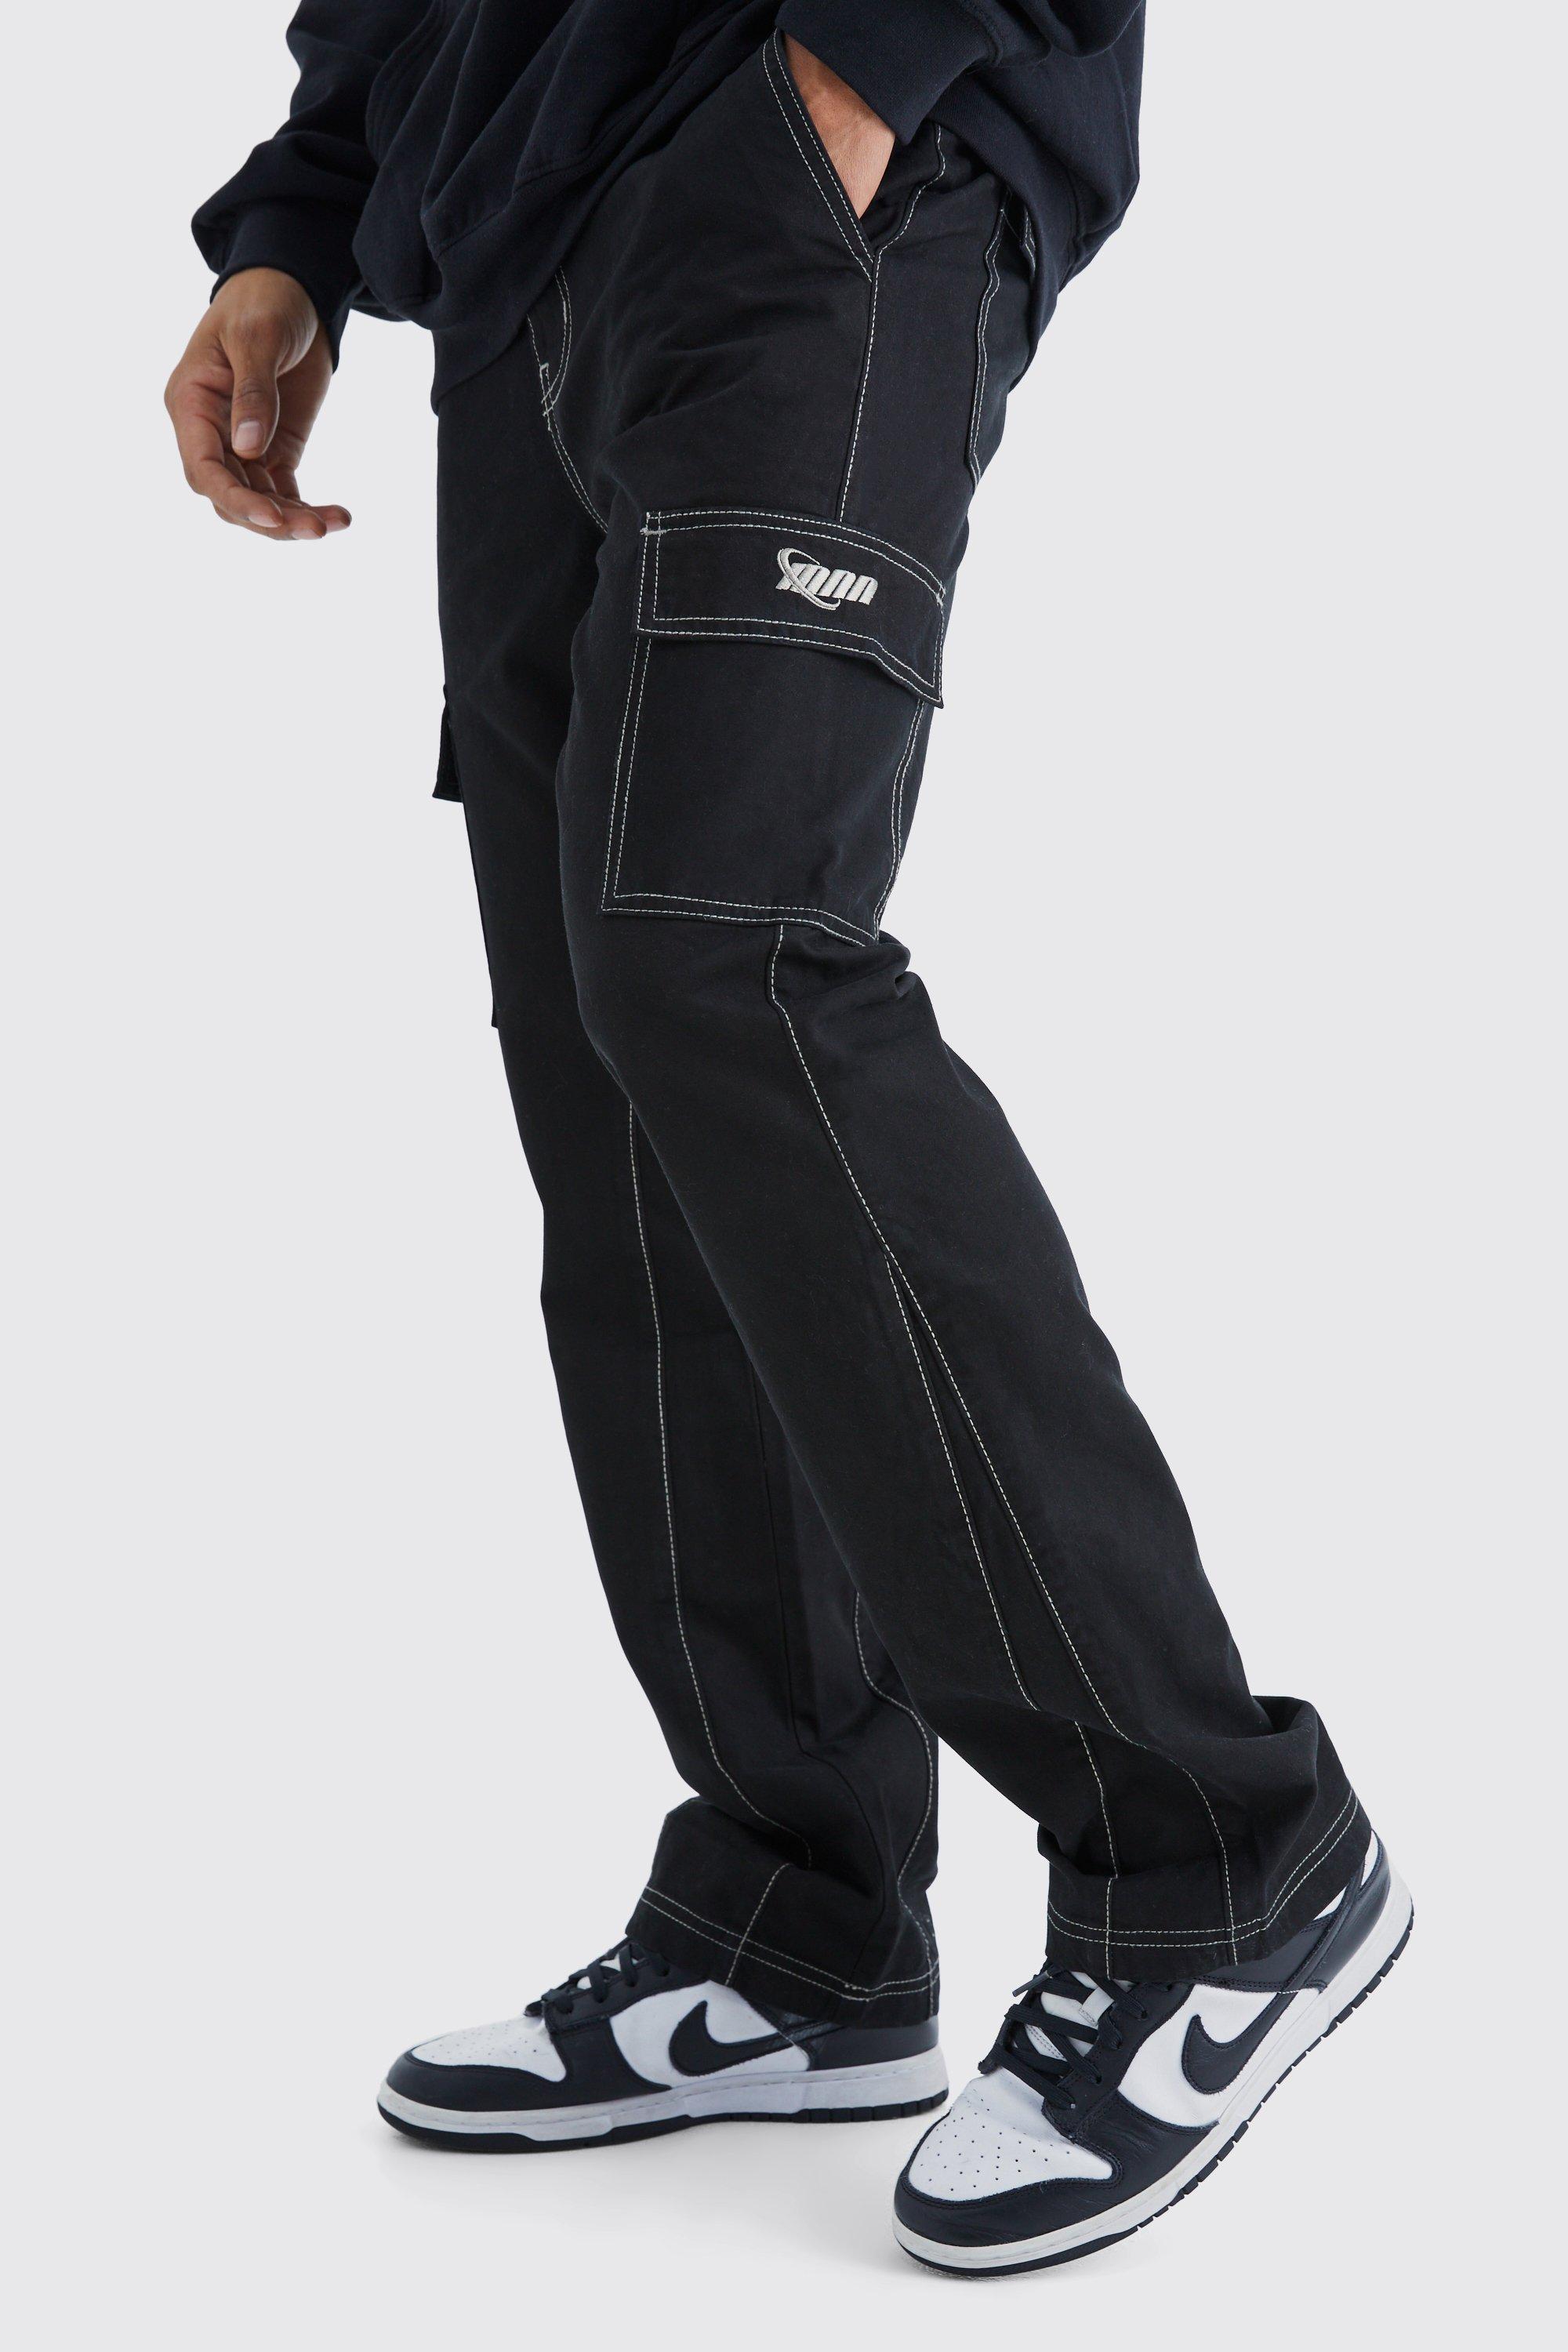 HSMQHJWE Pantalon Negro Para Hombre L Cargo Wear Cargo Men'S Full 6 Pocket  Work Pants Trousers Men'S Pants